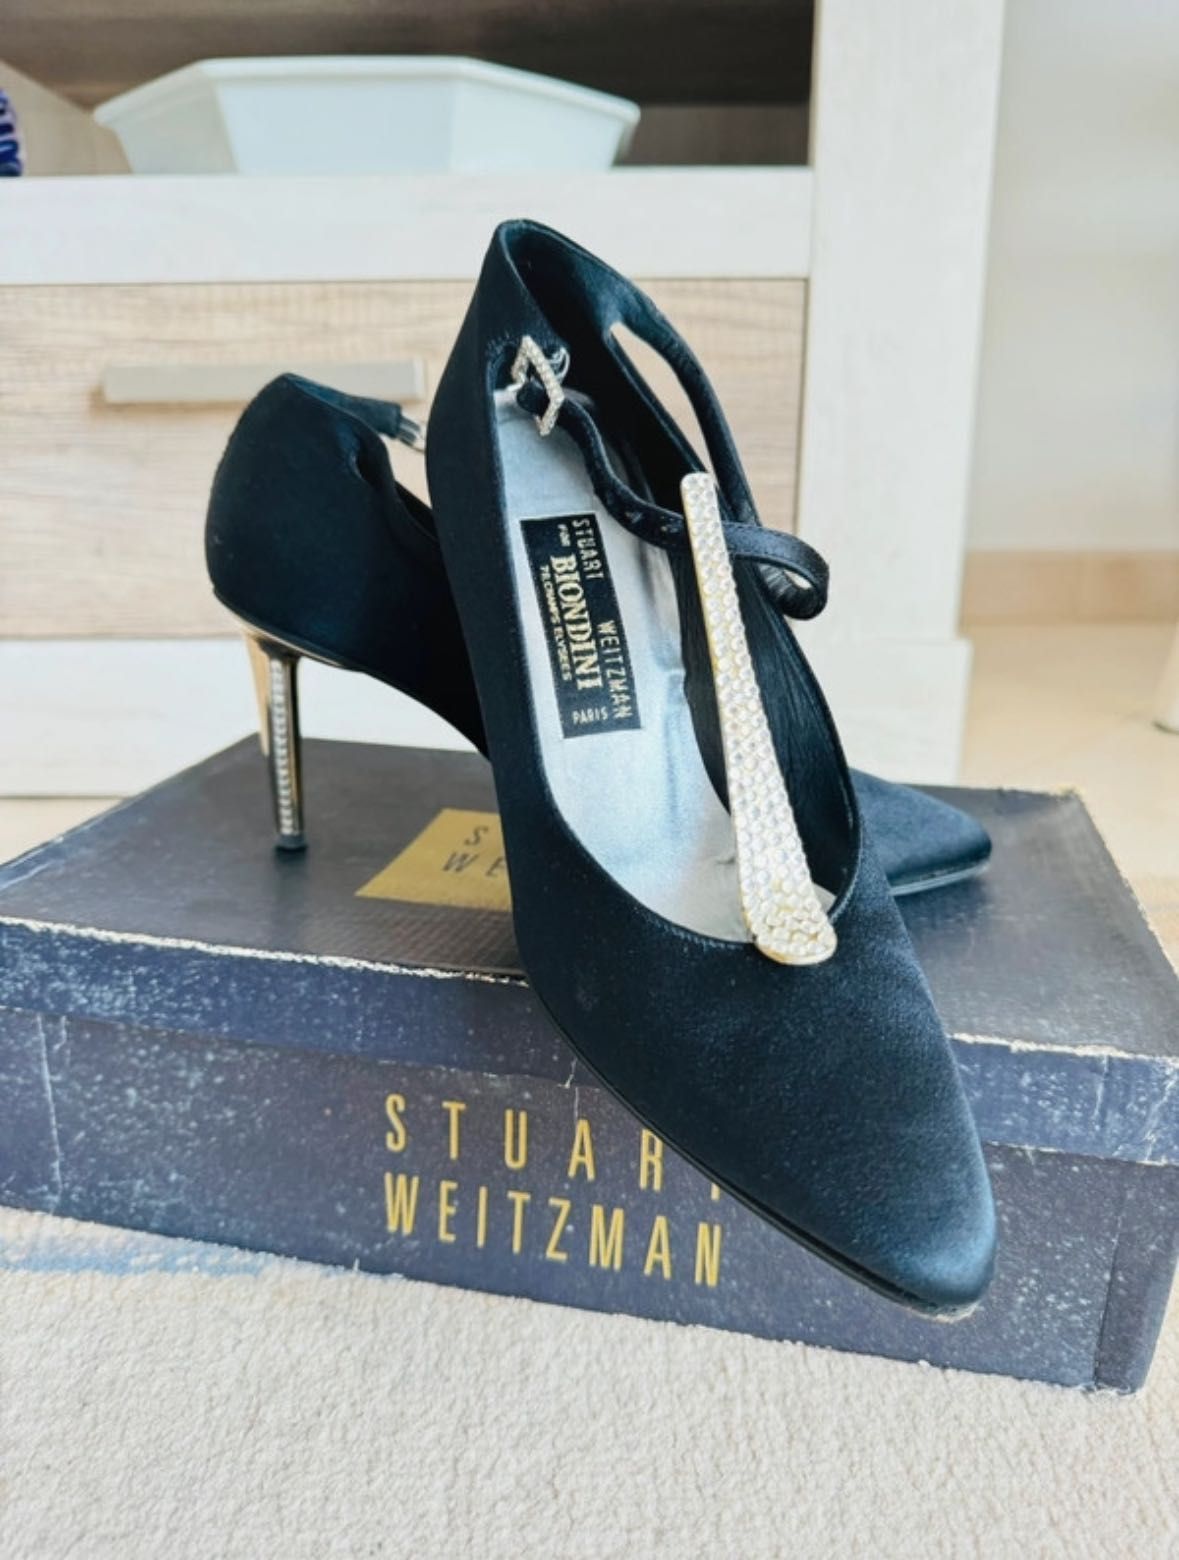 Sapatos Senhora Stuart Weitzman